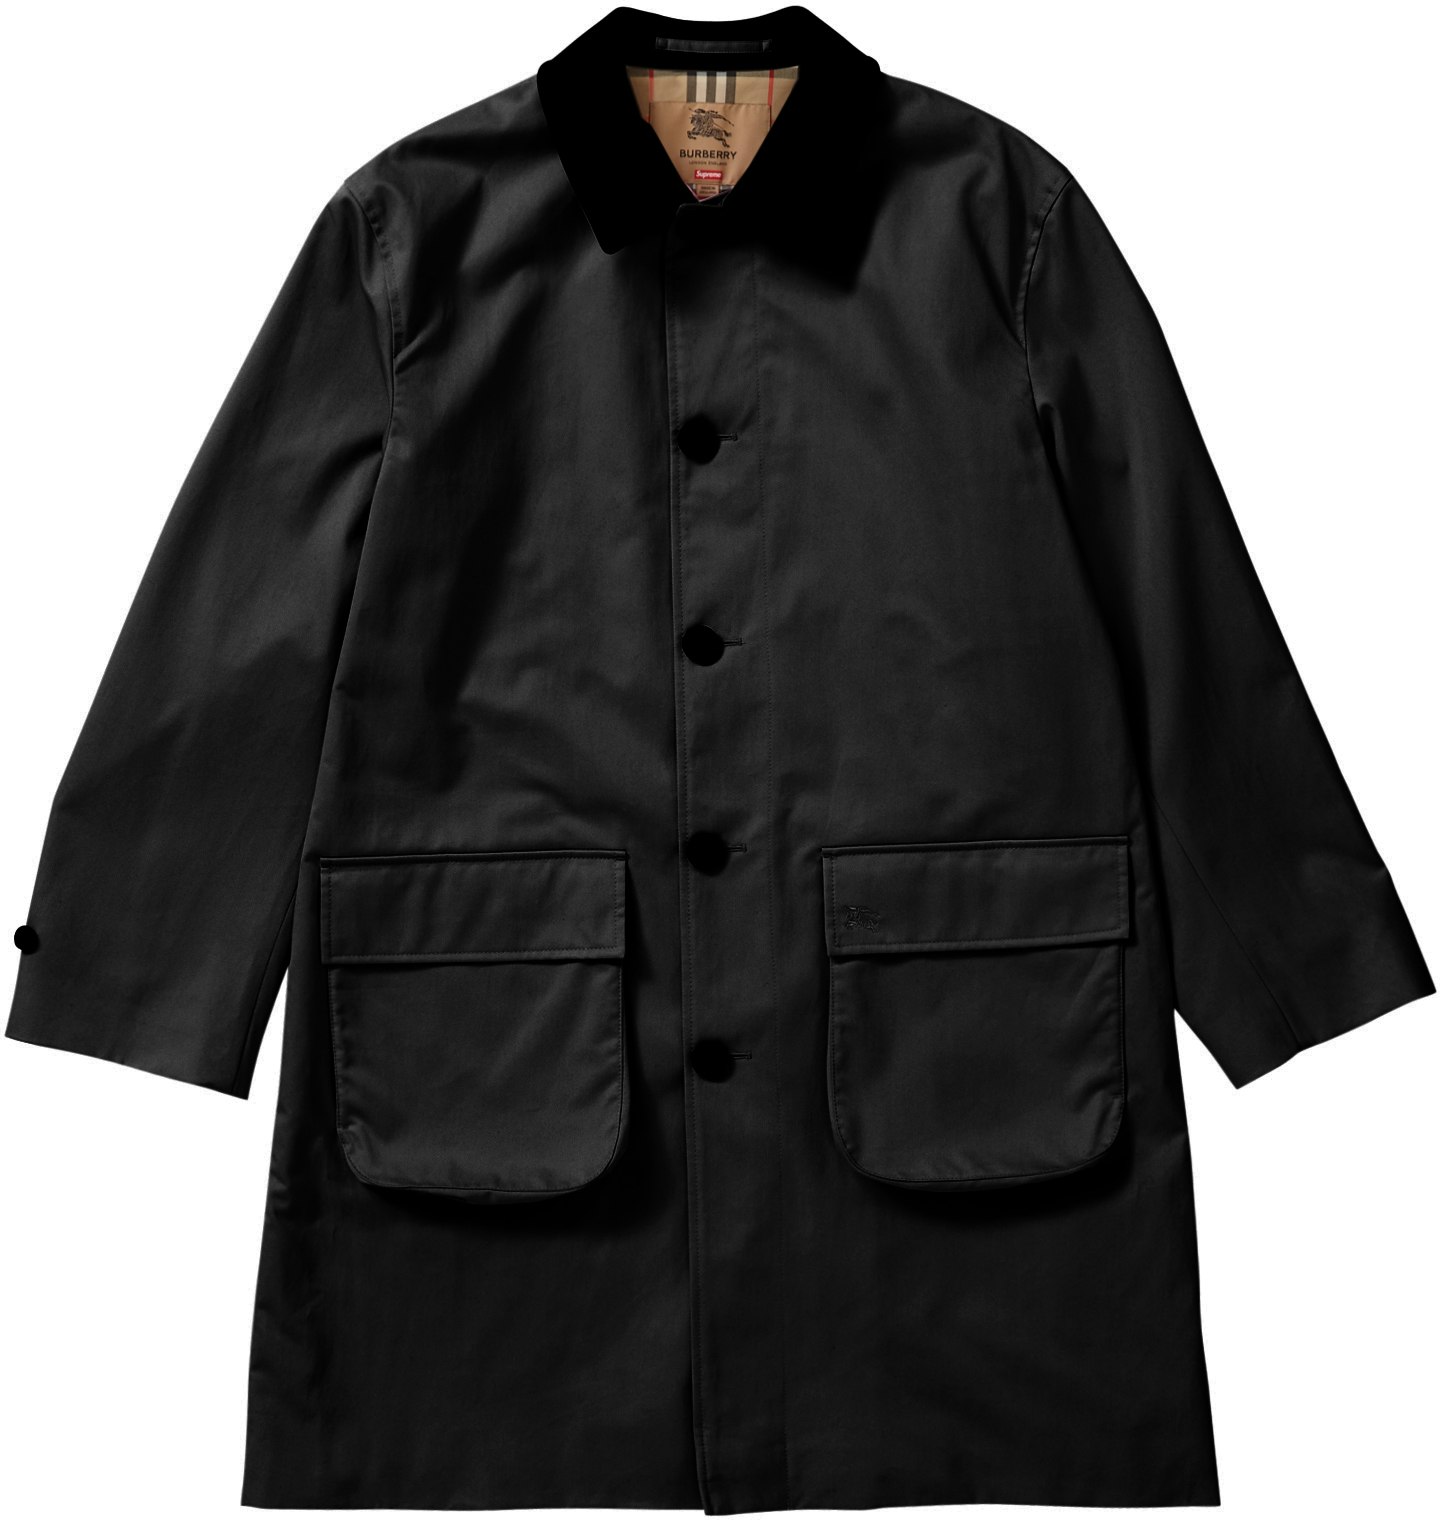 Supreme x Burberry Leather Collar Trench 'Black' - Novelship